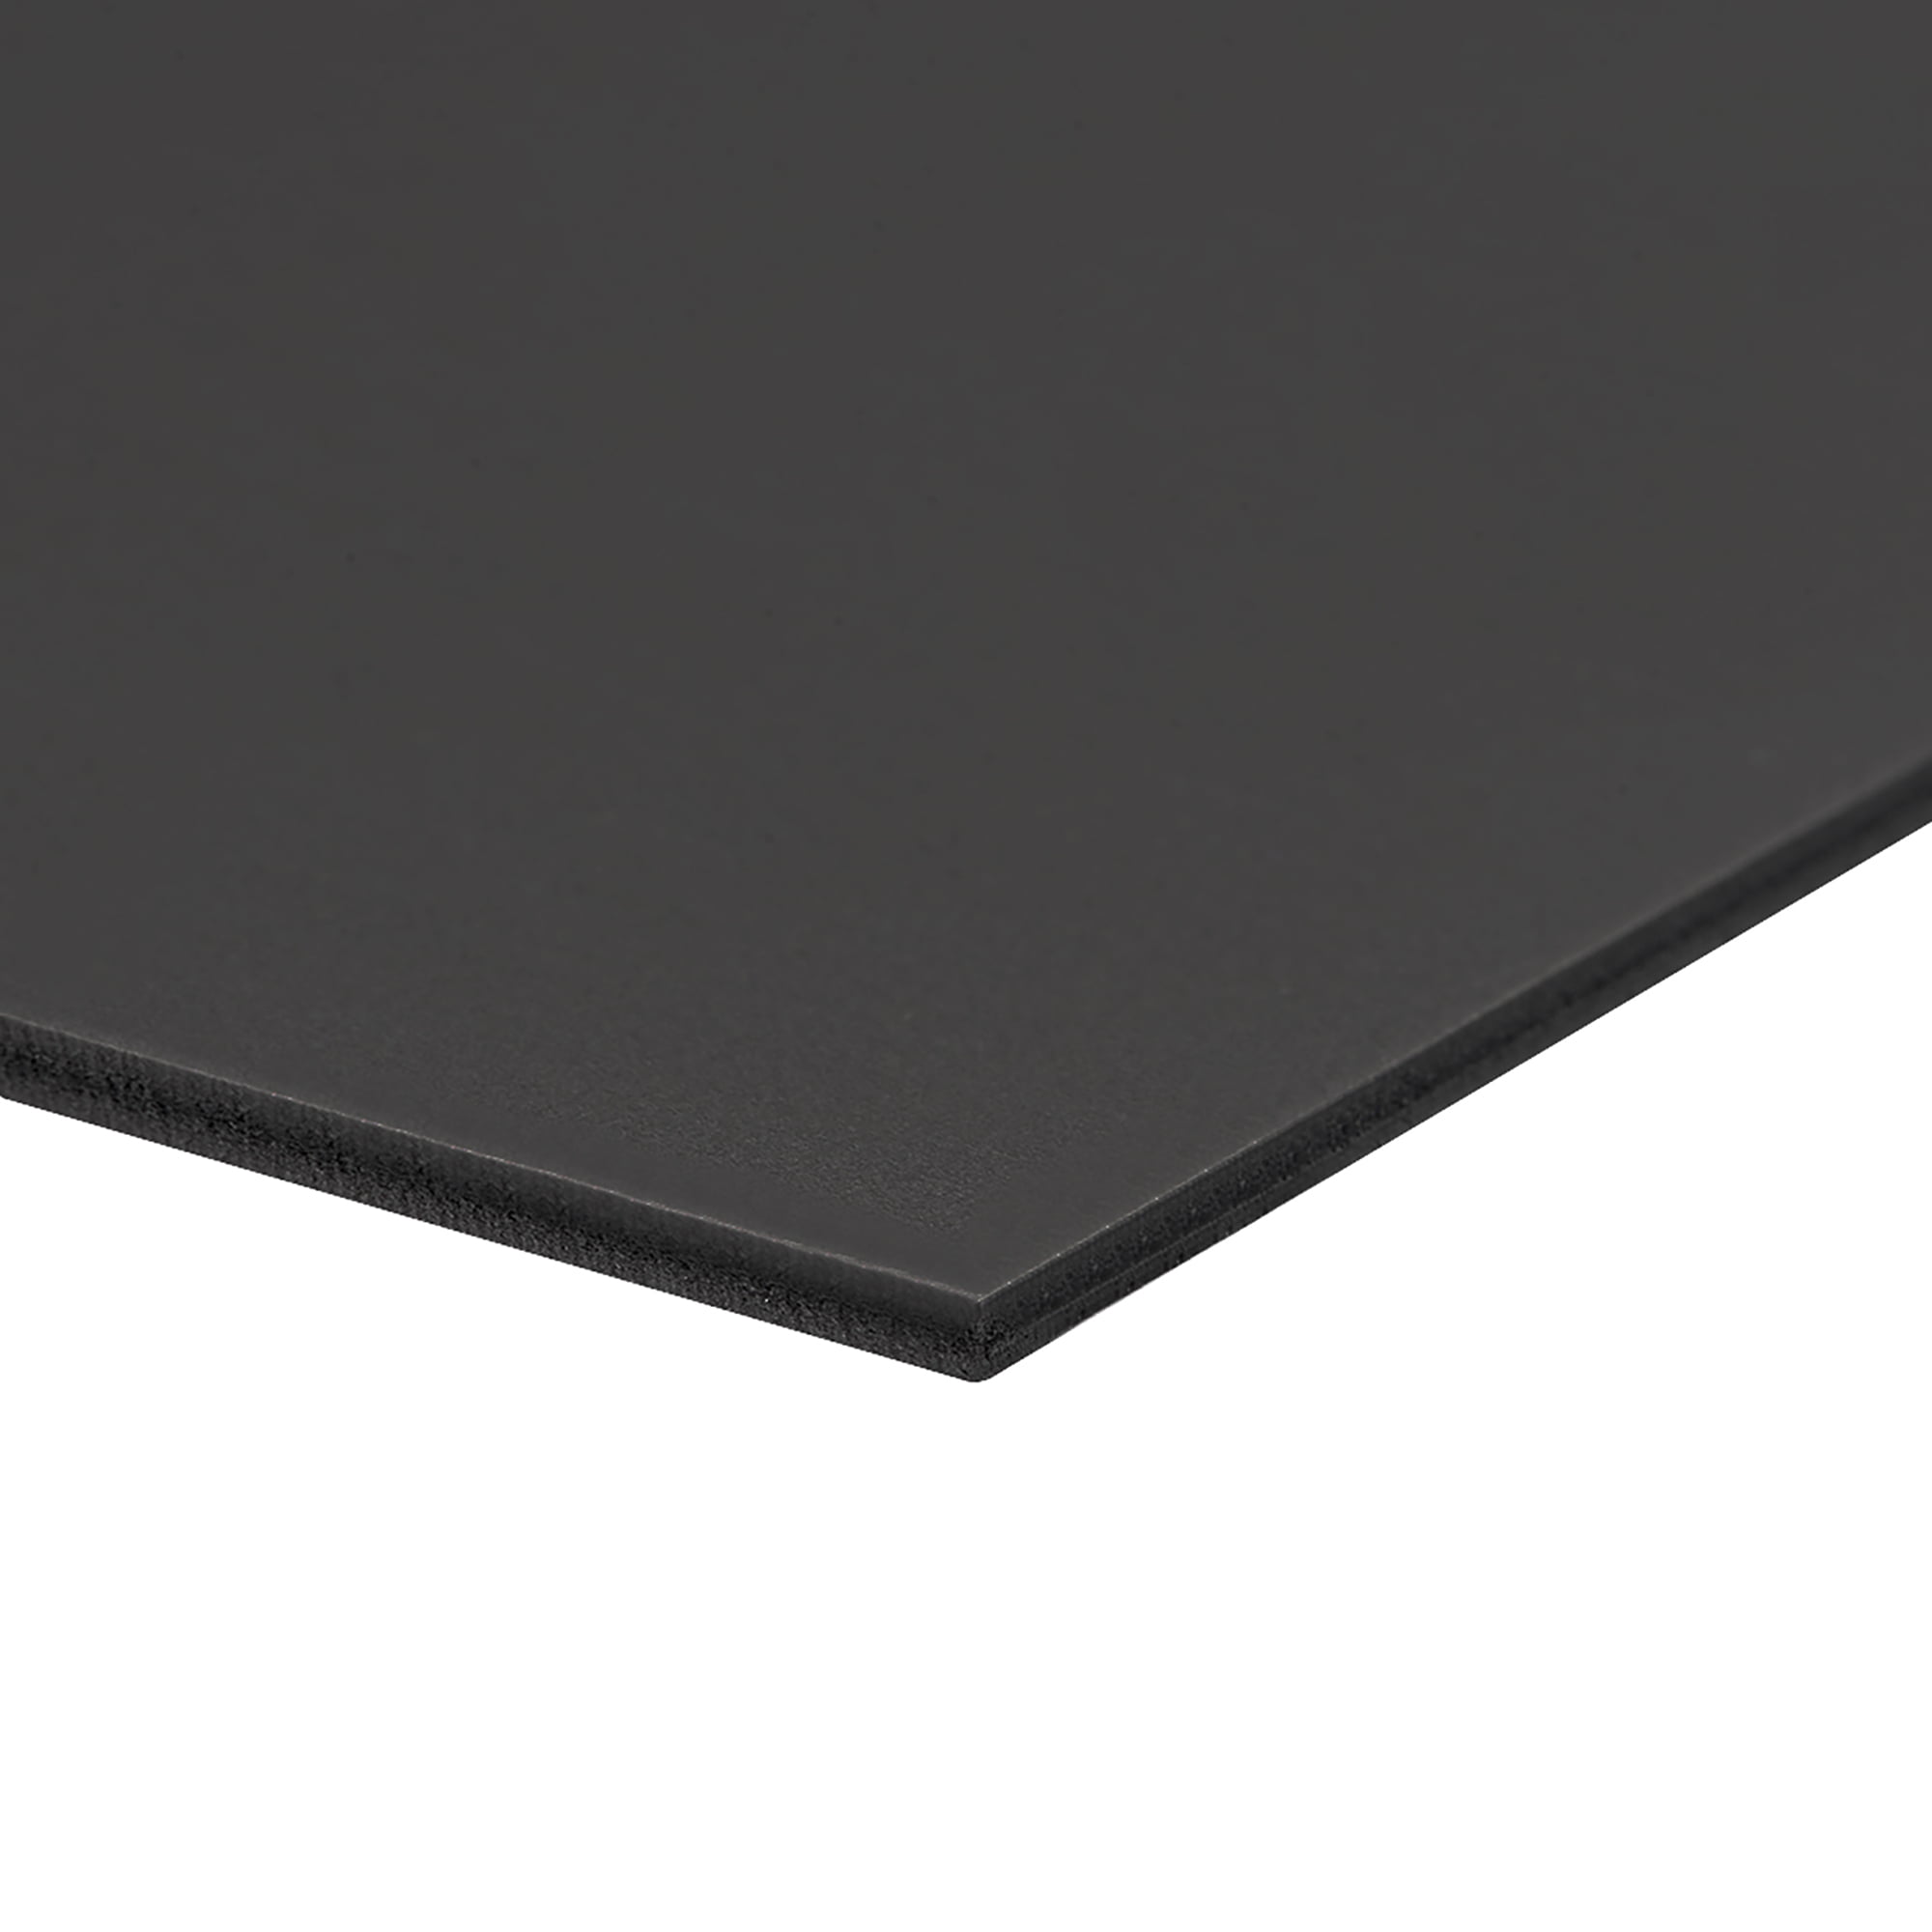 PVC Foam Board Sheet,3mmT x12"Wx16“L,Yellow,Double Sided,Expanded PVC Sheet 2pcs 